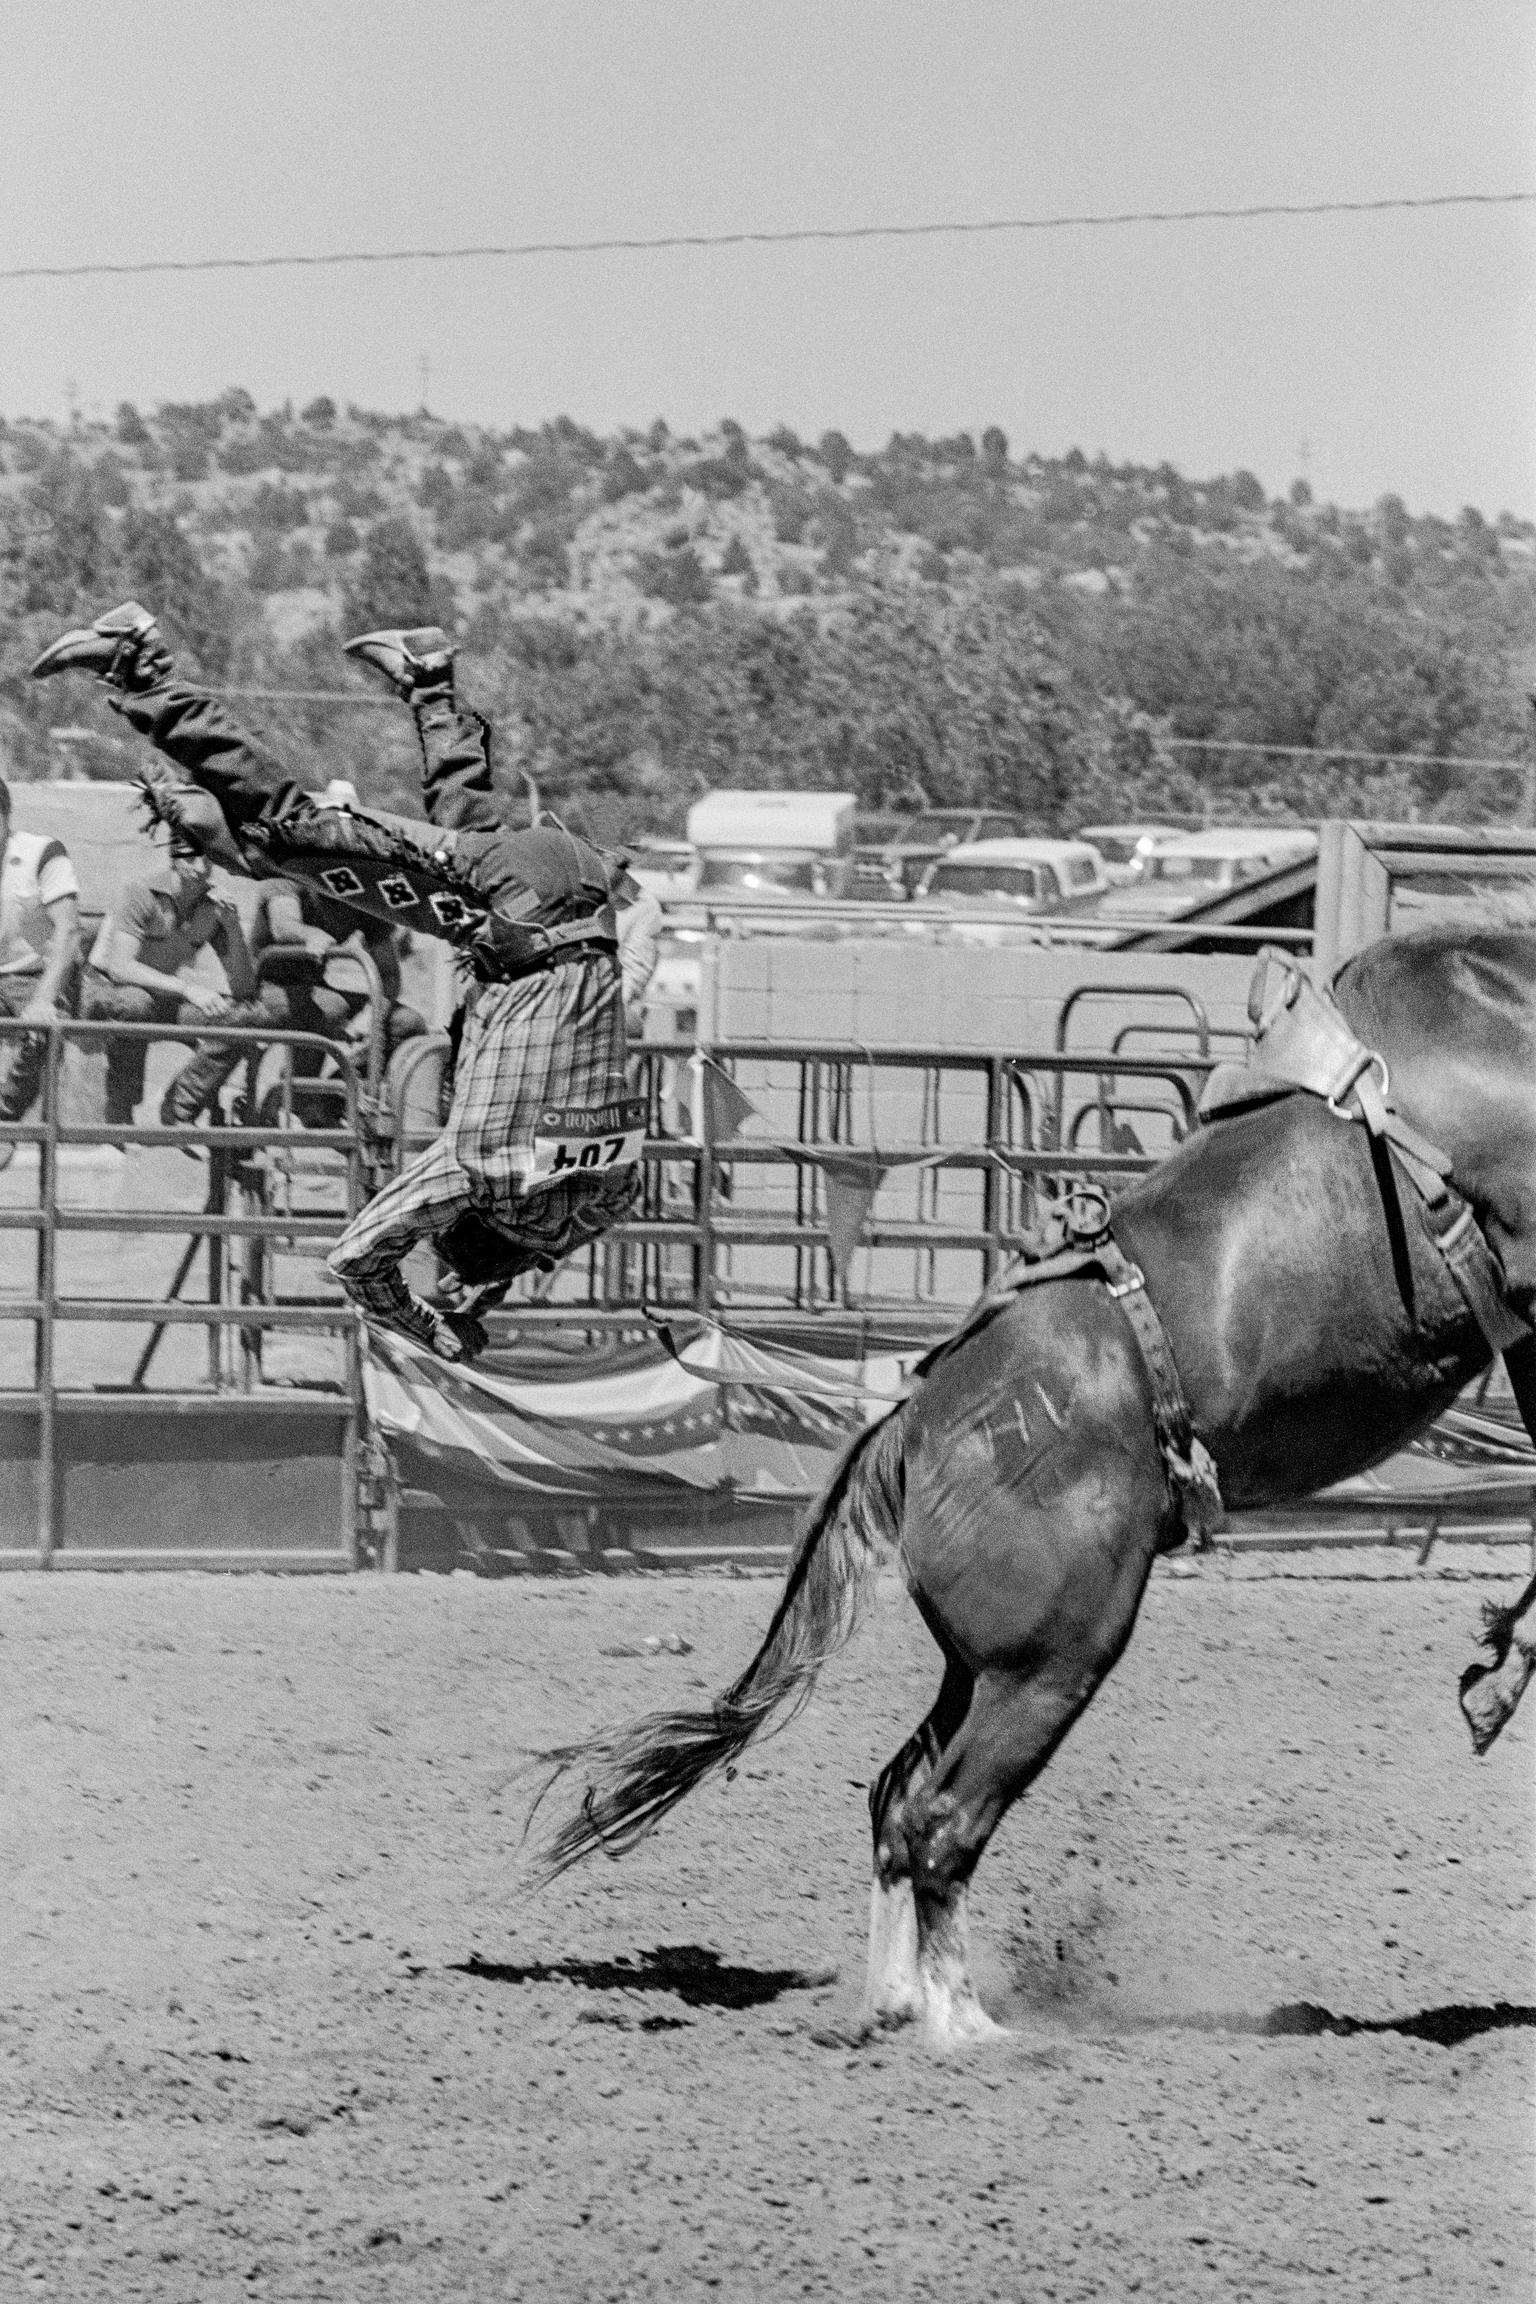 Apache Junction. The Senior Pro Rodeo. Bareback riding. Arizona USA